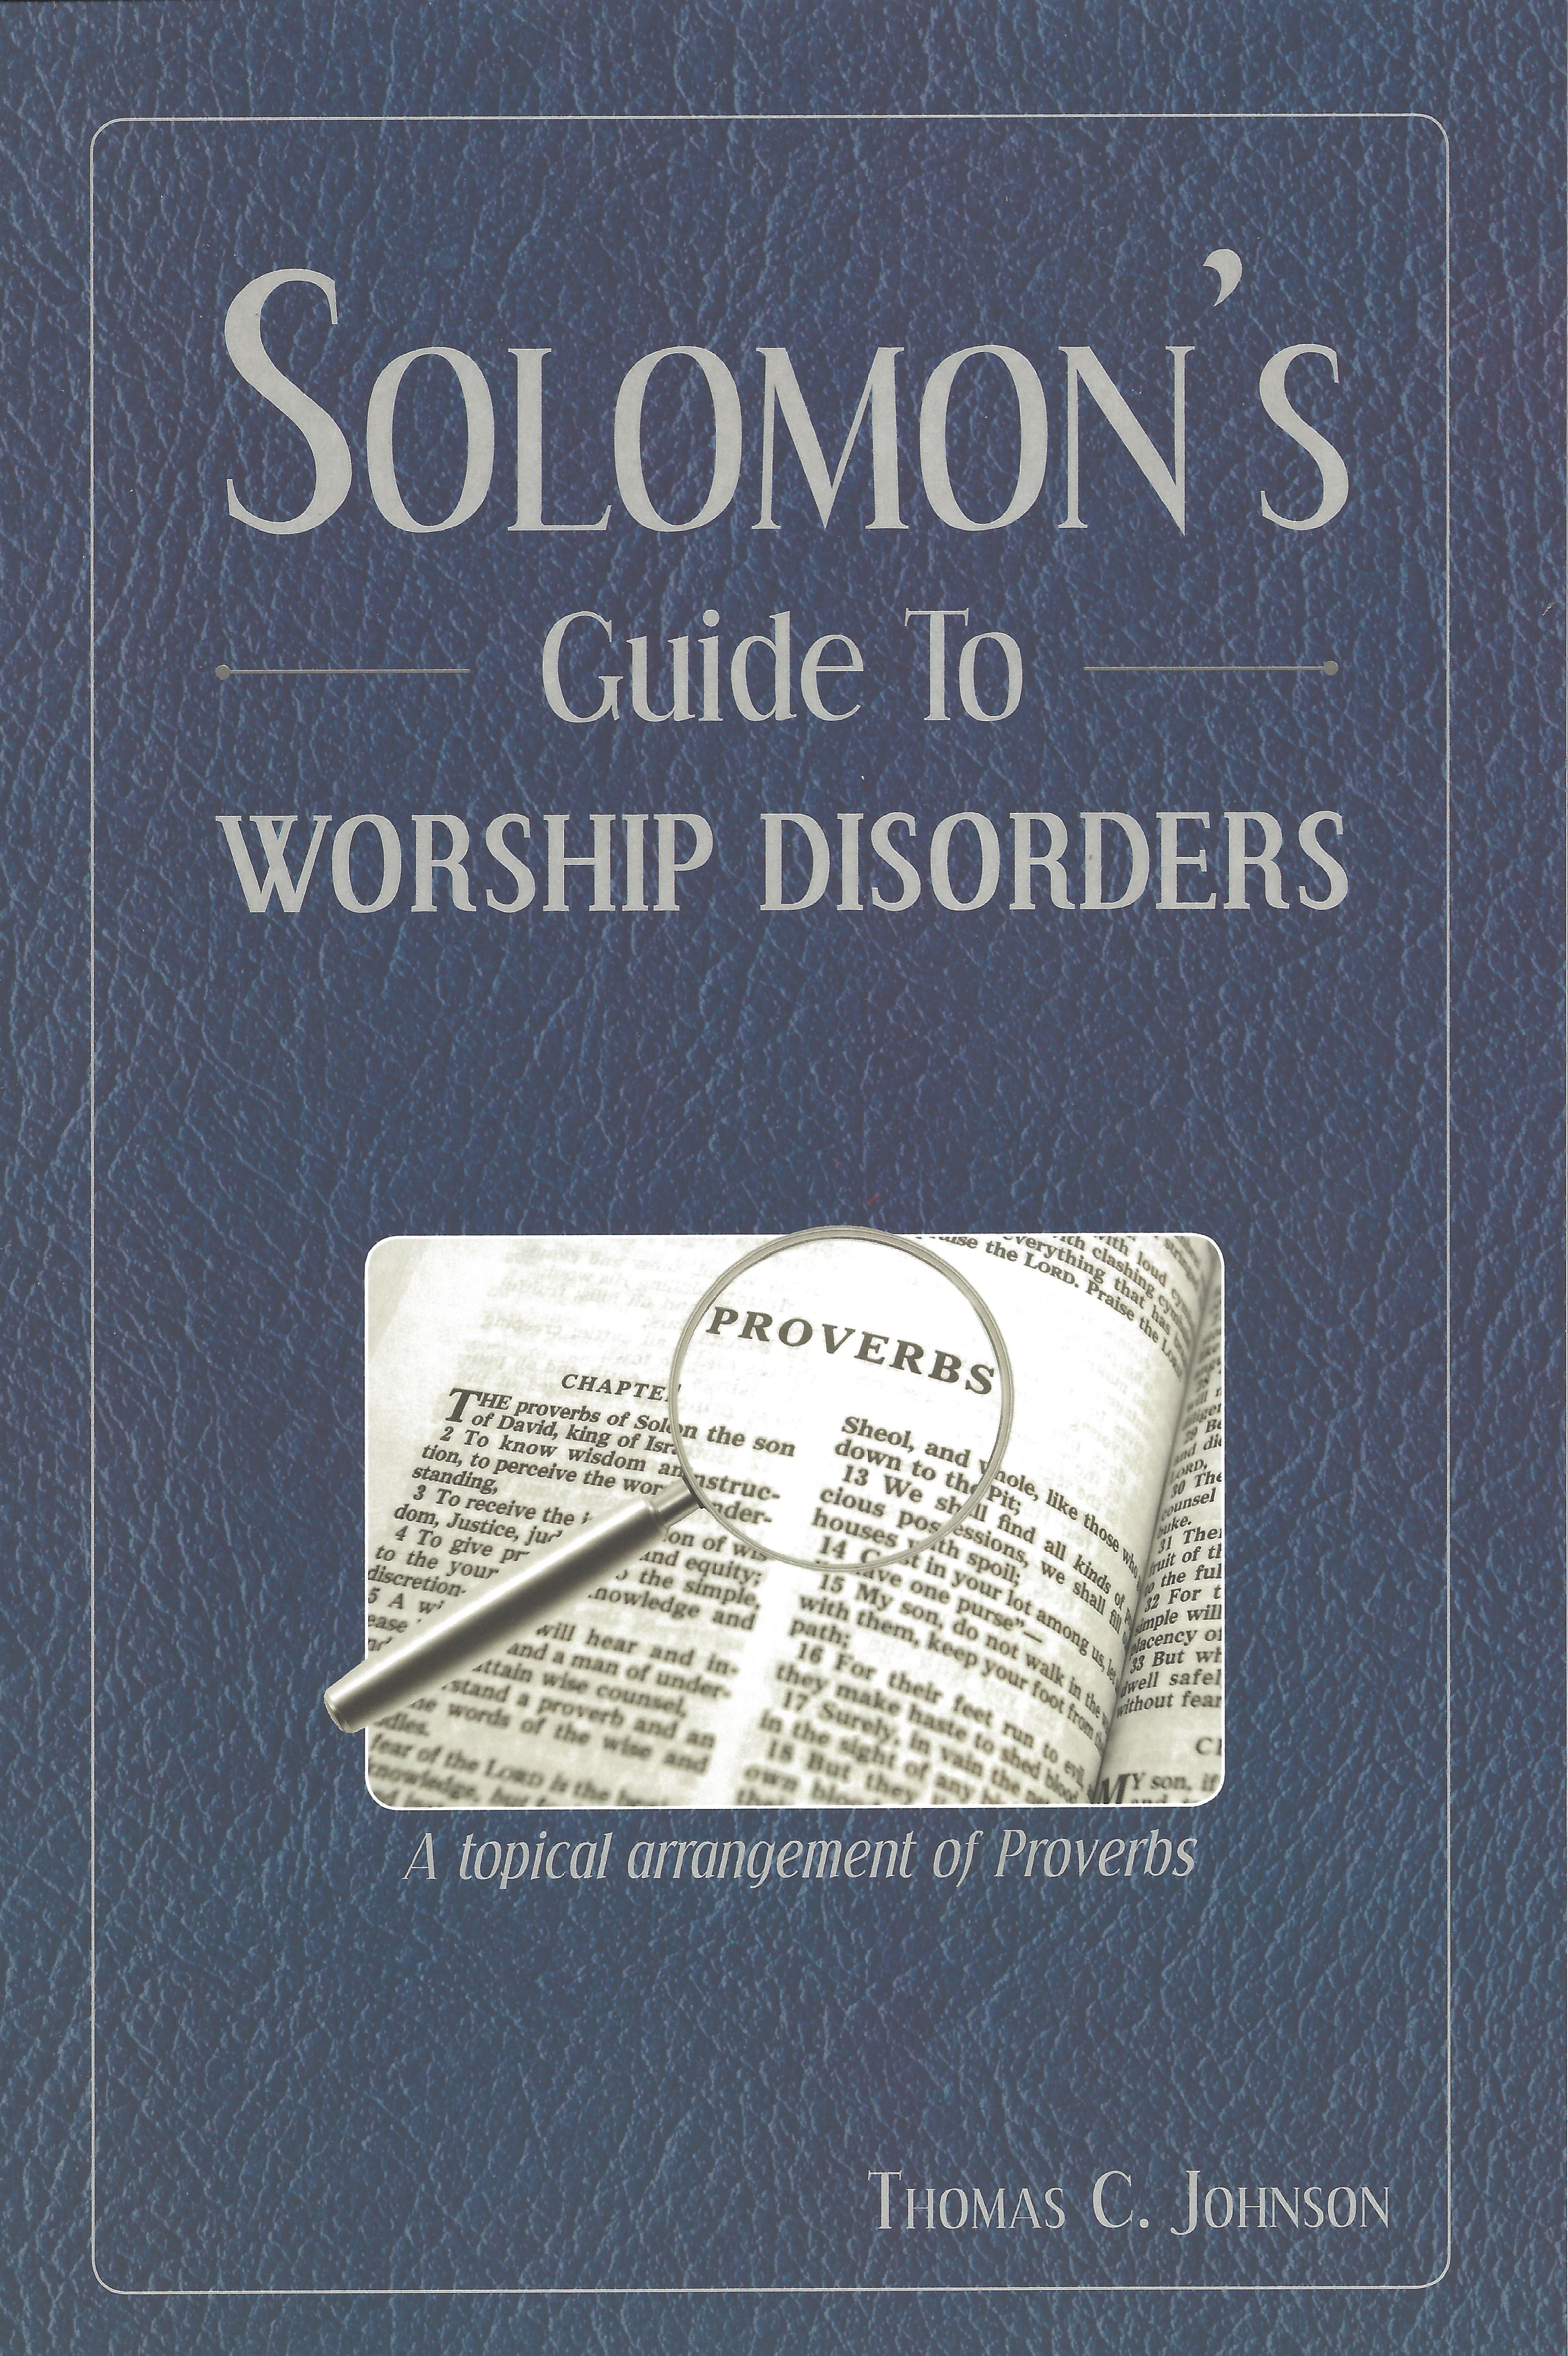 SOLOMON'S GUIDE TO WORSHIP DISORDERS Thomas C. Johnson